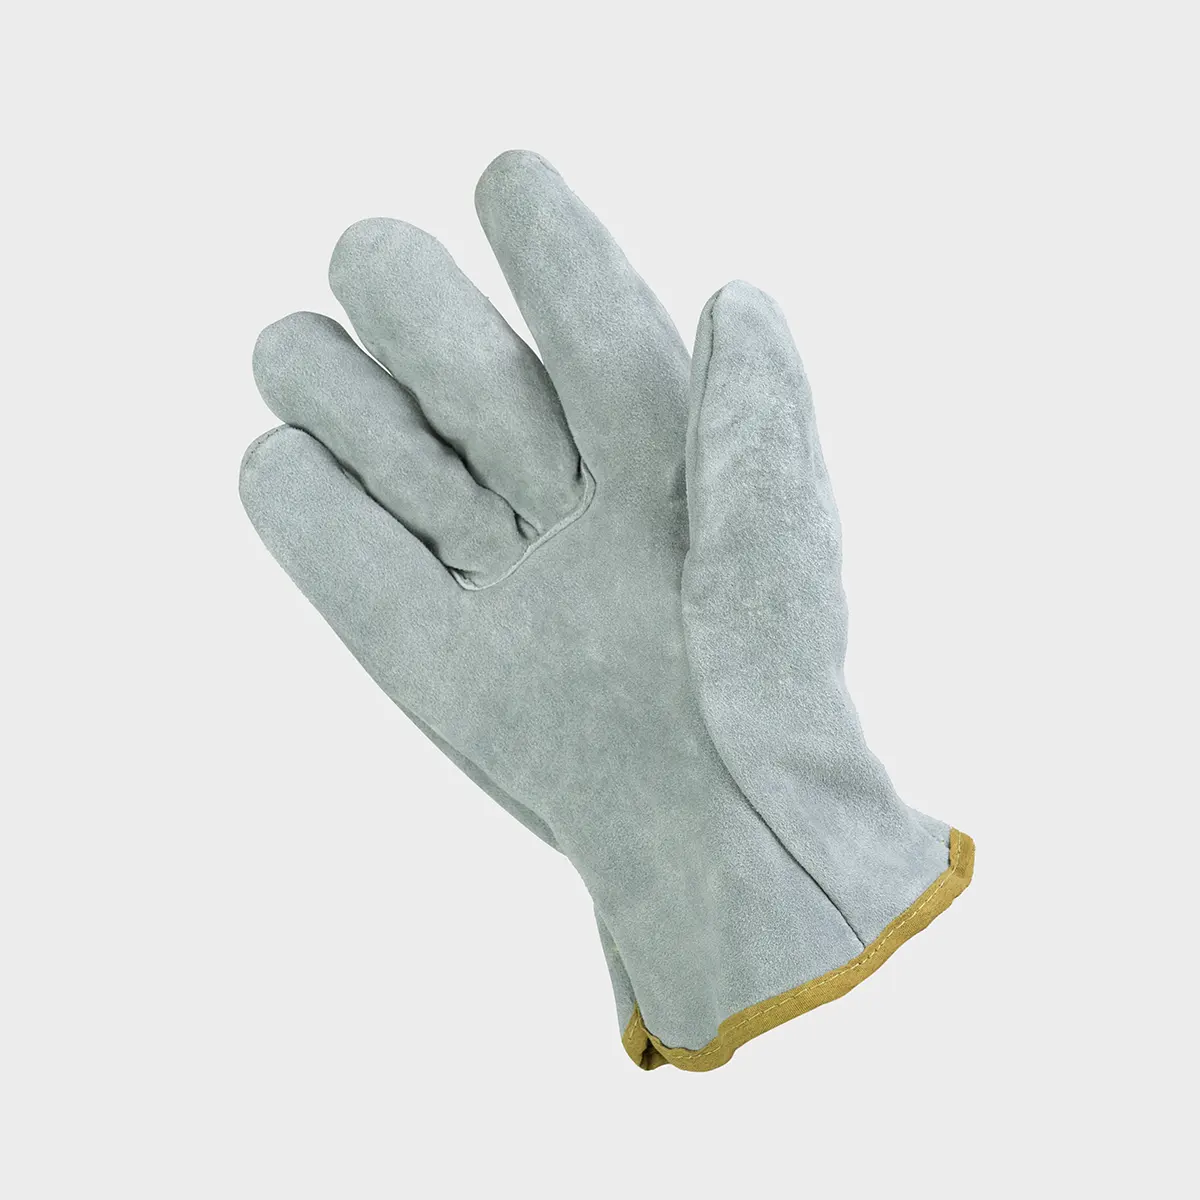 Fahr handschuhe Männer Real Solid Sheep skin Leder Sicherheits arbeits handschuhe